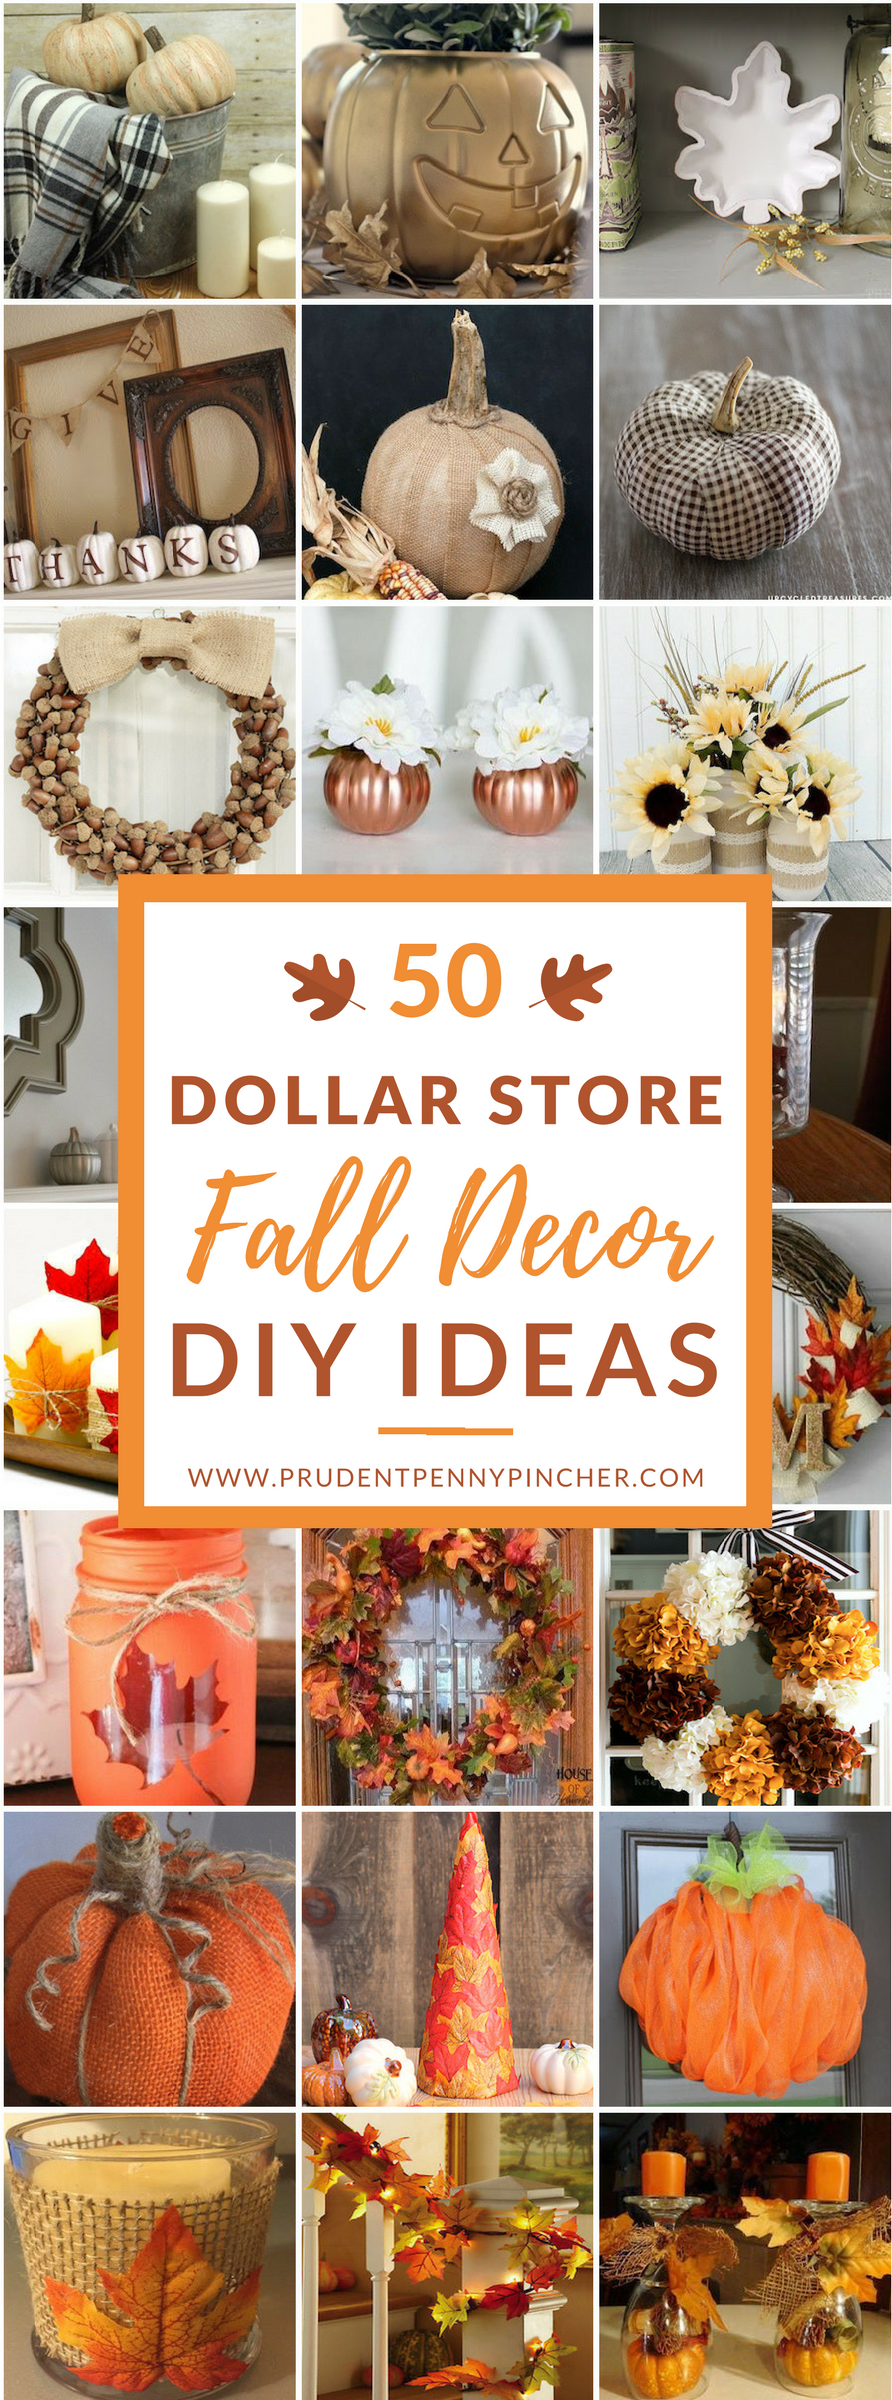 50 Dollar Store Fall Decor DIY Ideas - Prudent Penny Pincher